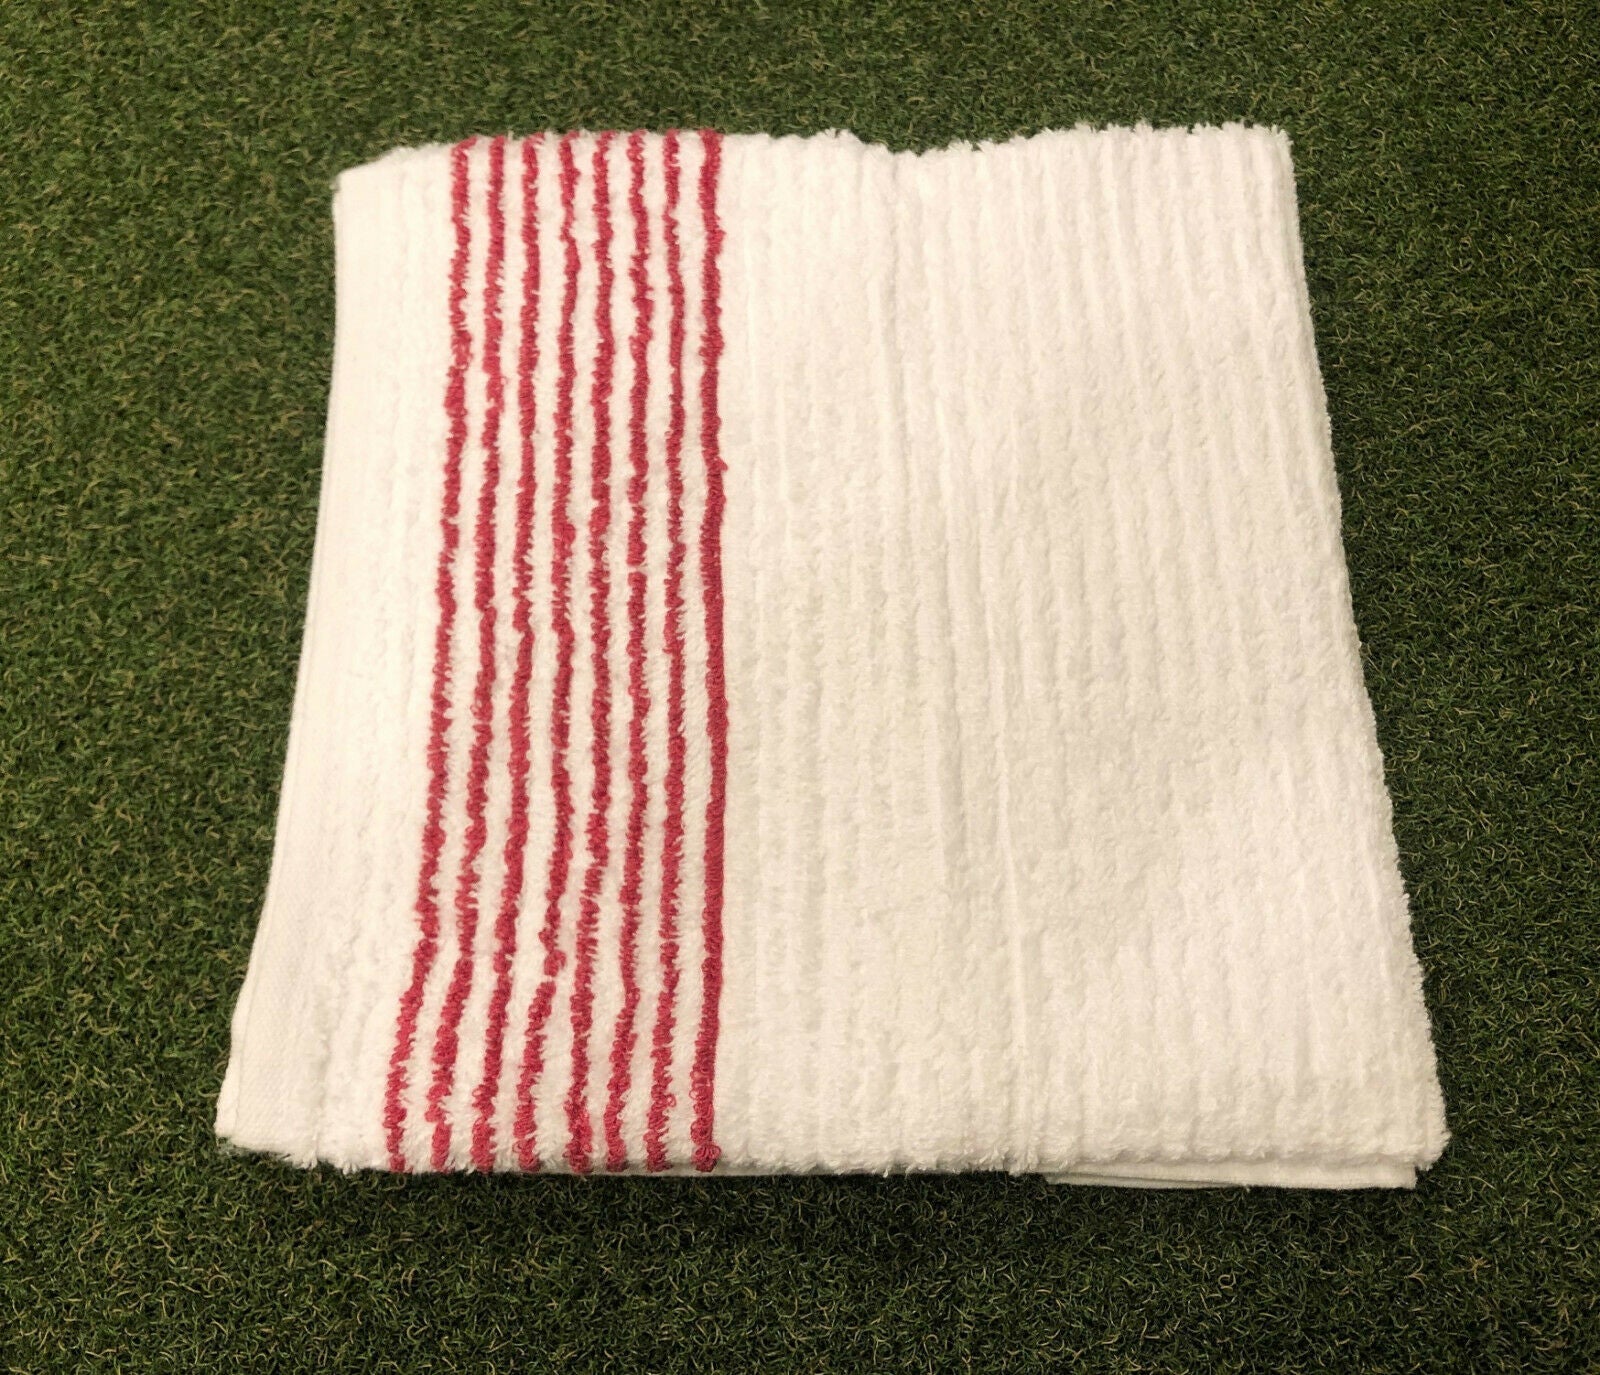 Large 22" x 44" Golf Tour Caddy Towel - White w/ Blue, Black, Red, Green Stripe - The Golf Club Trader